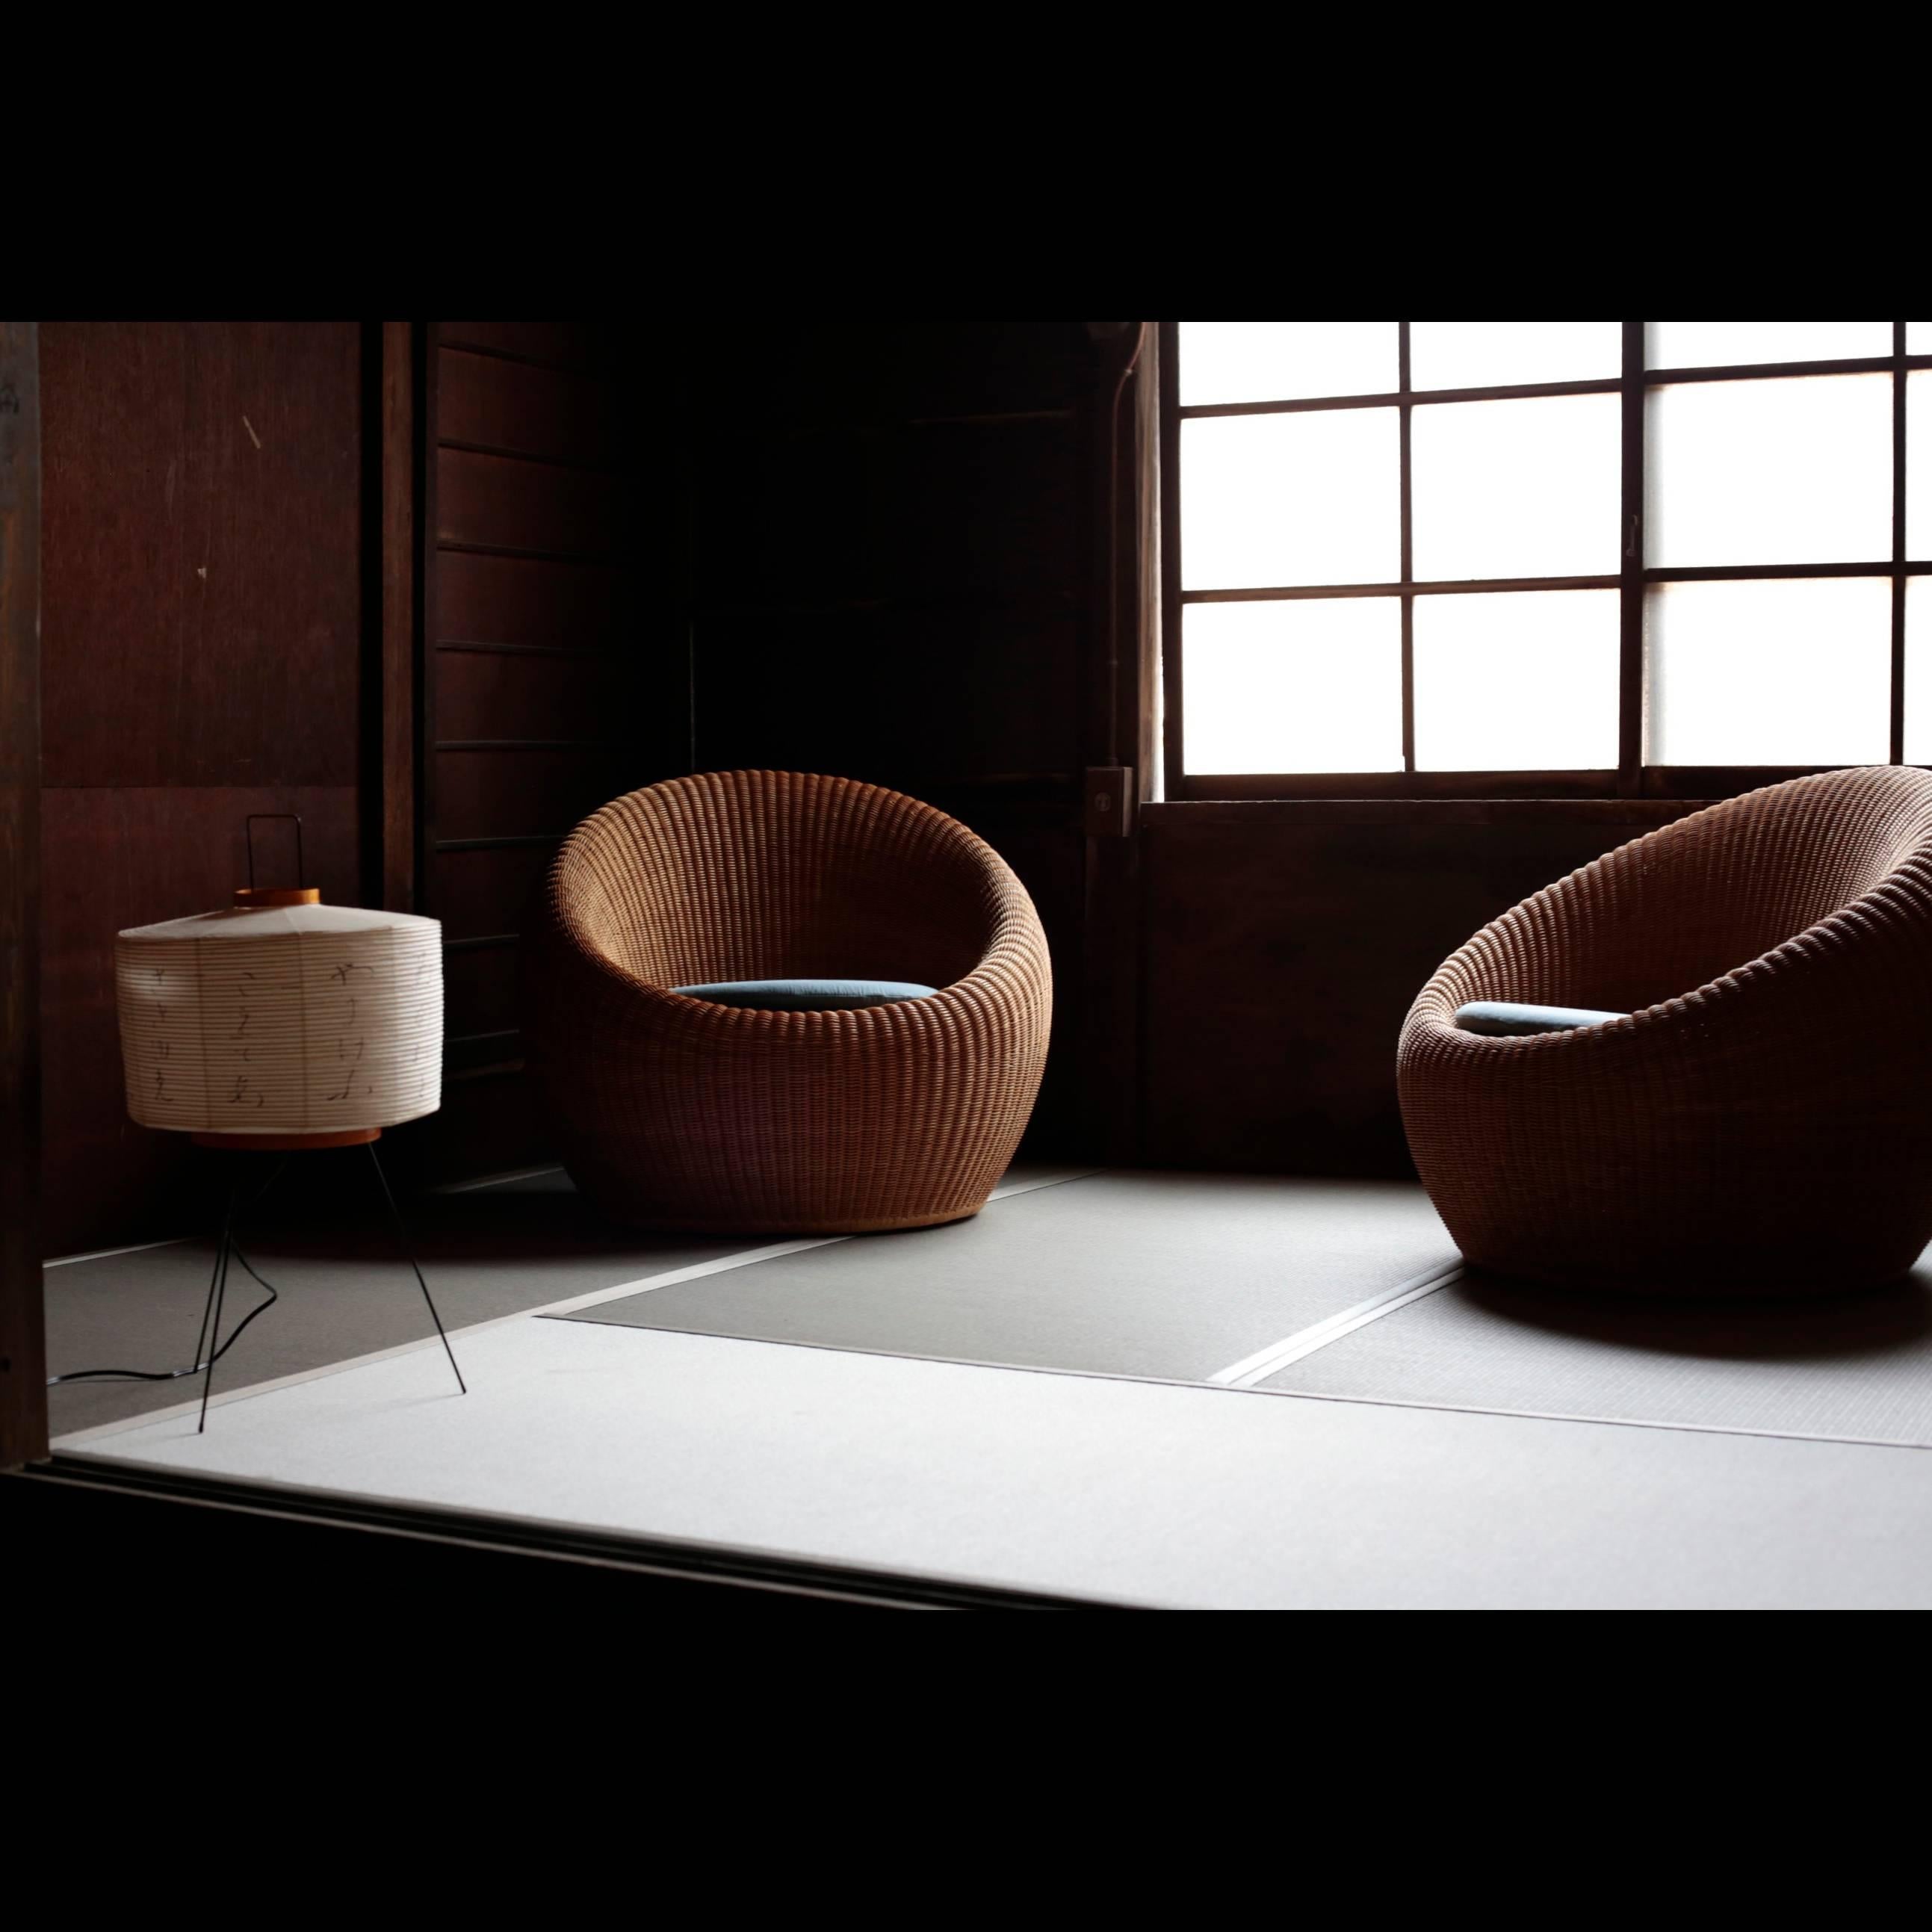 Japanese Pair of Isamu Kenmochi Rattan Chairs